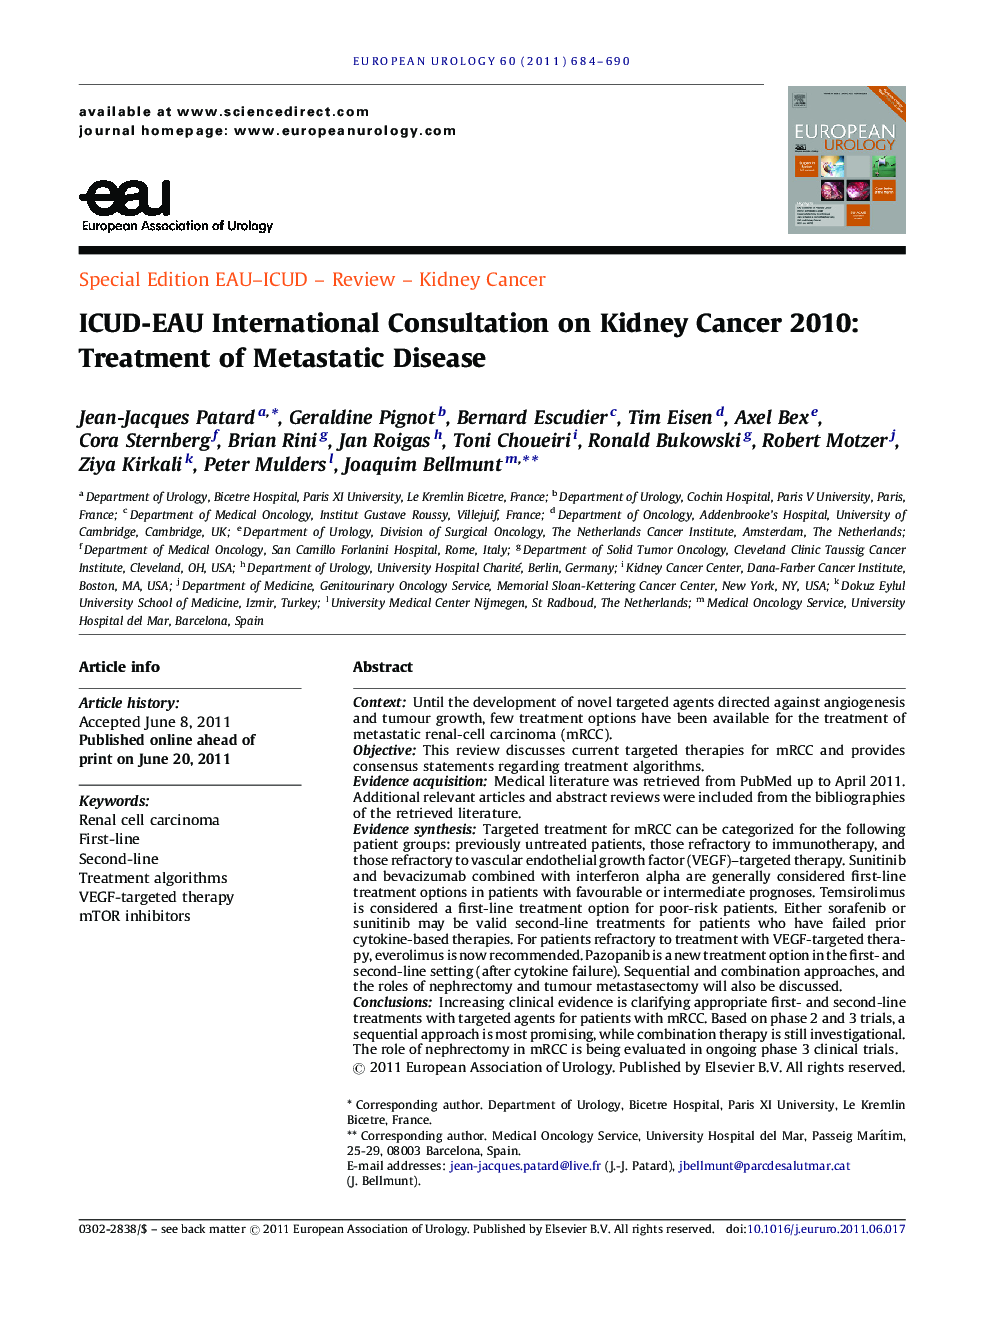 ICUD-EAU International Consultation on Kidney Cancer 2010: Treatment of Metastatic Disease